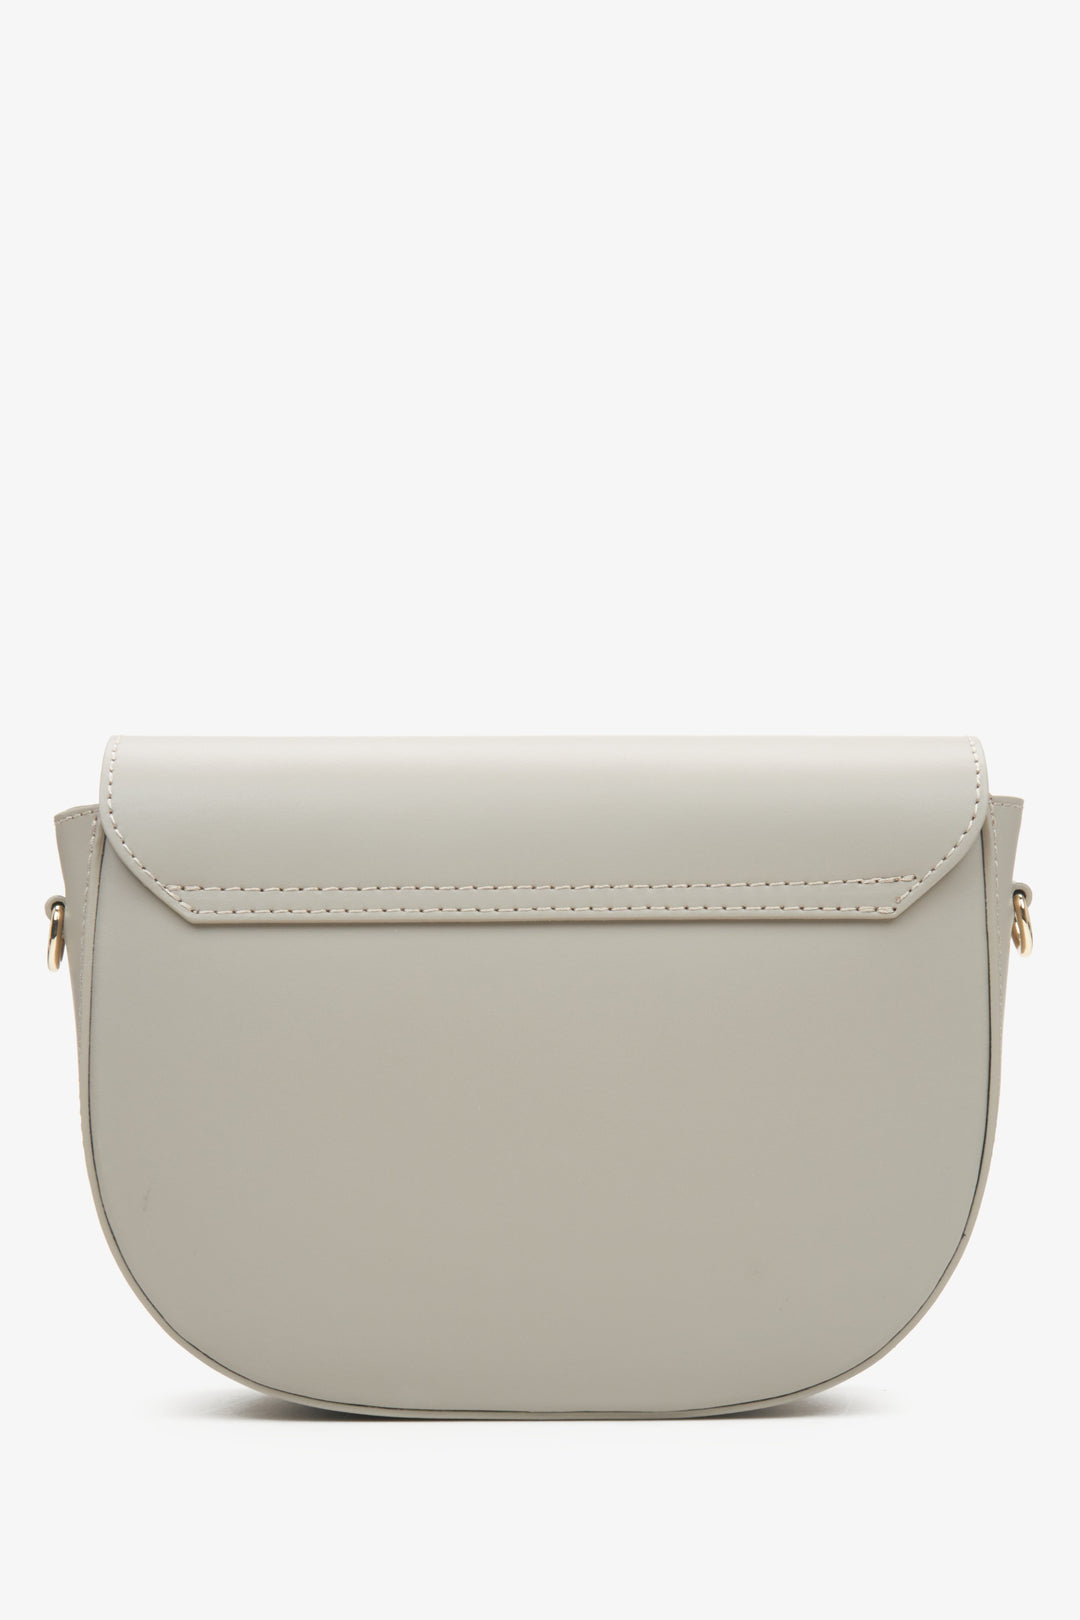 Estro grey semi-circle women's handbag made of Italian genuine leather - back view of the model.